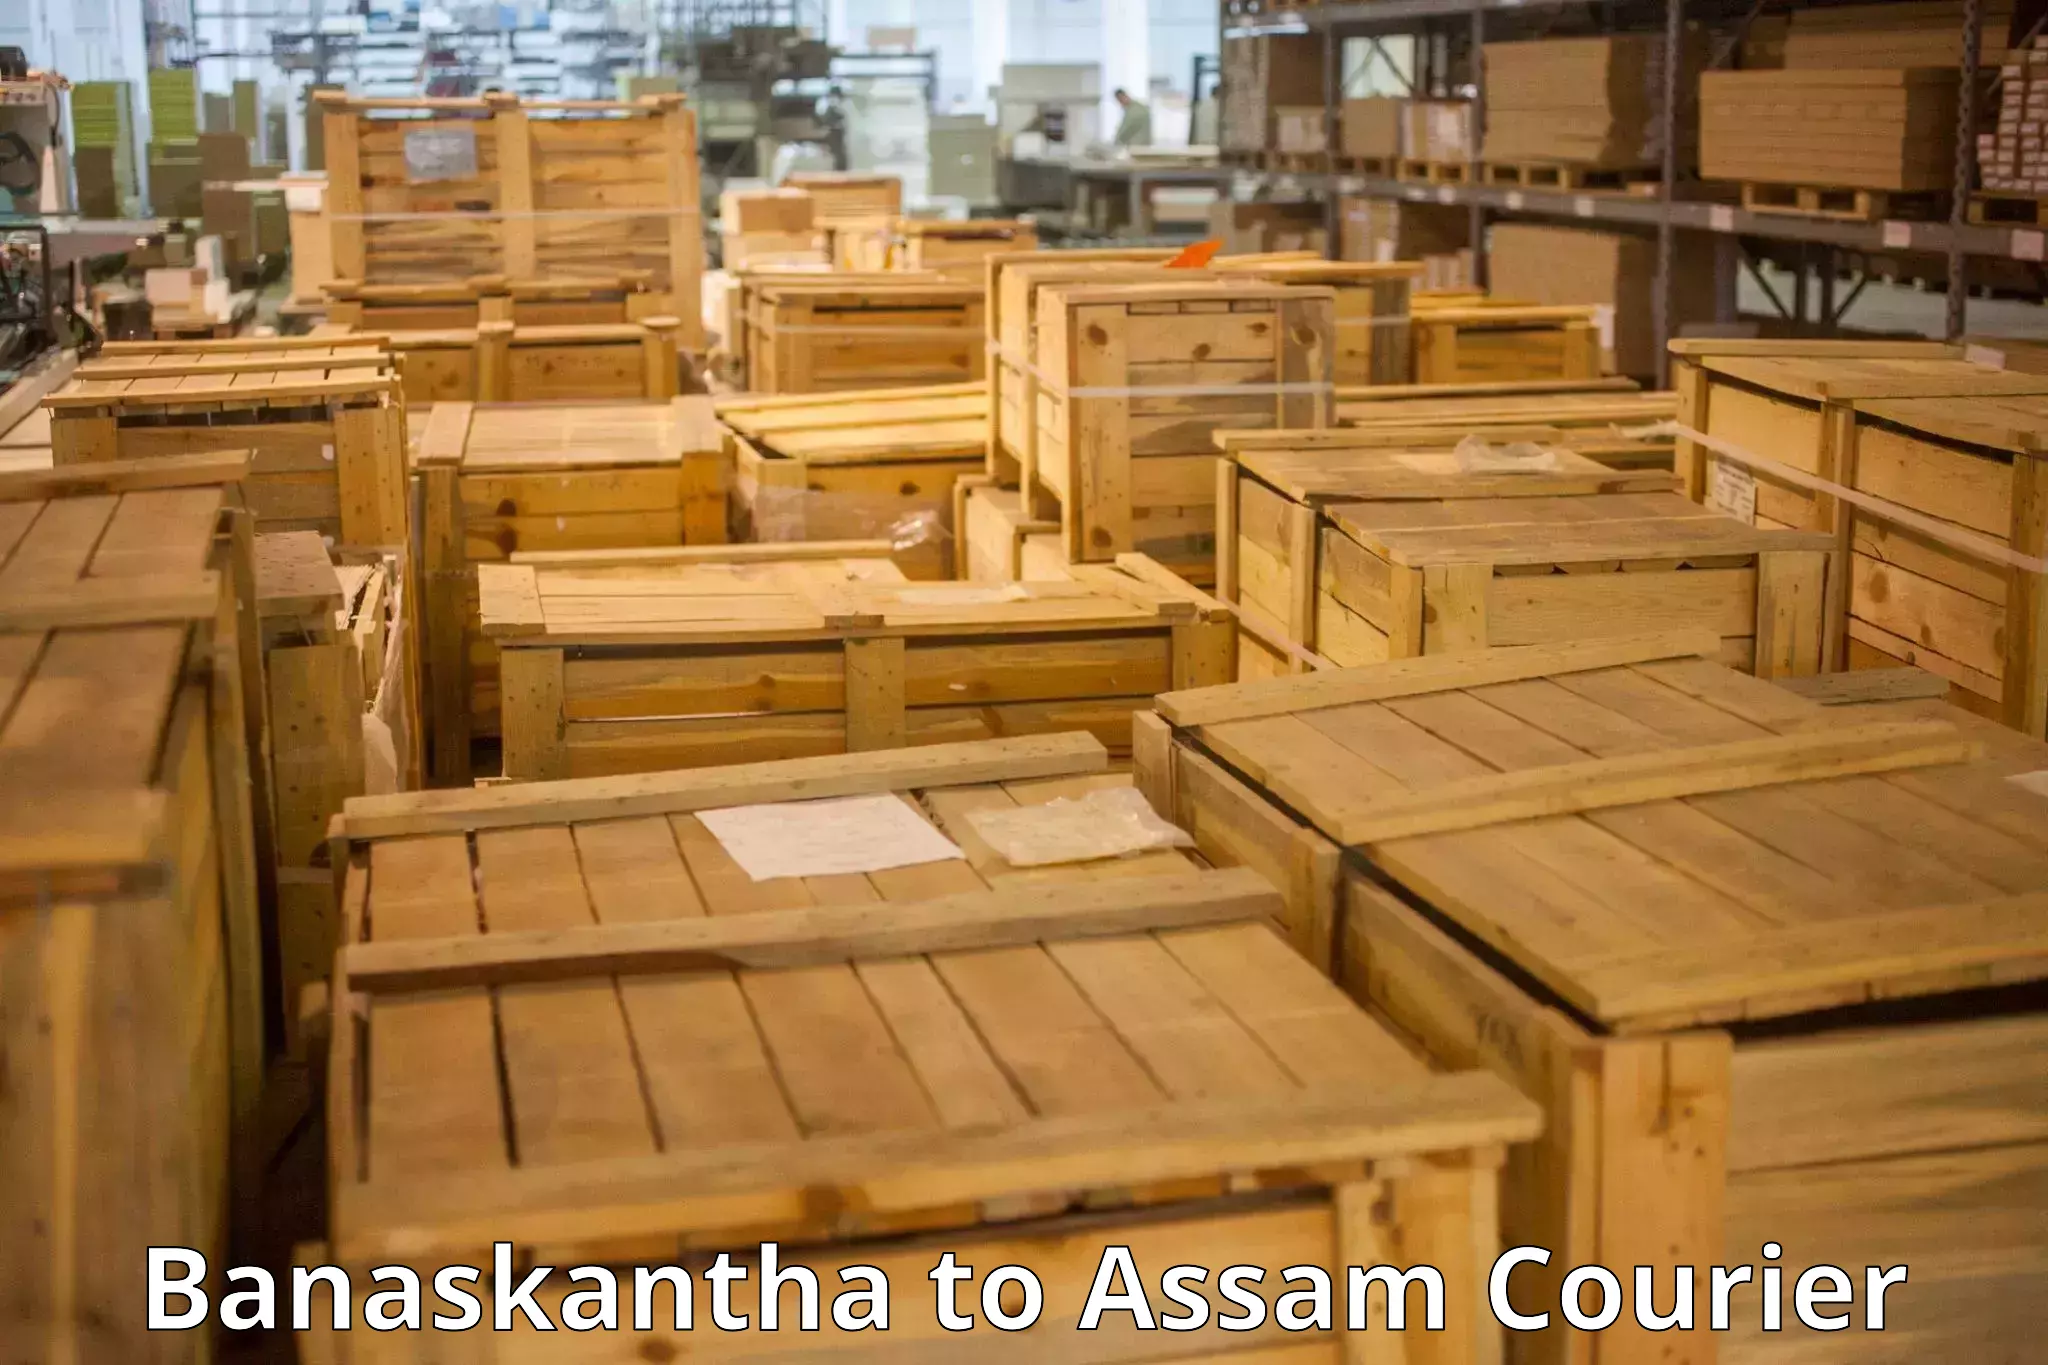 Luggage shipment tracking Banaskantha to Sonitpur